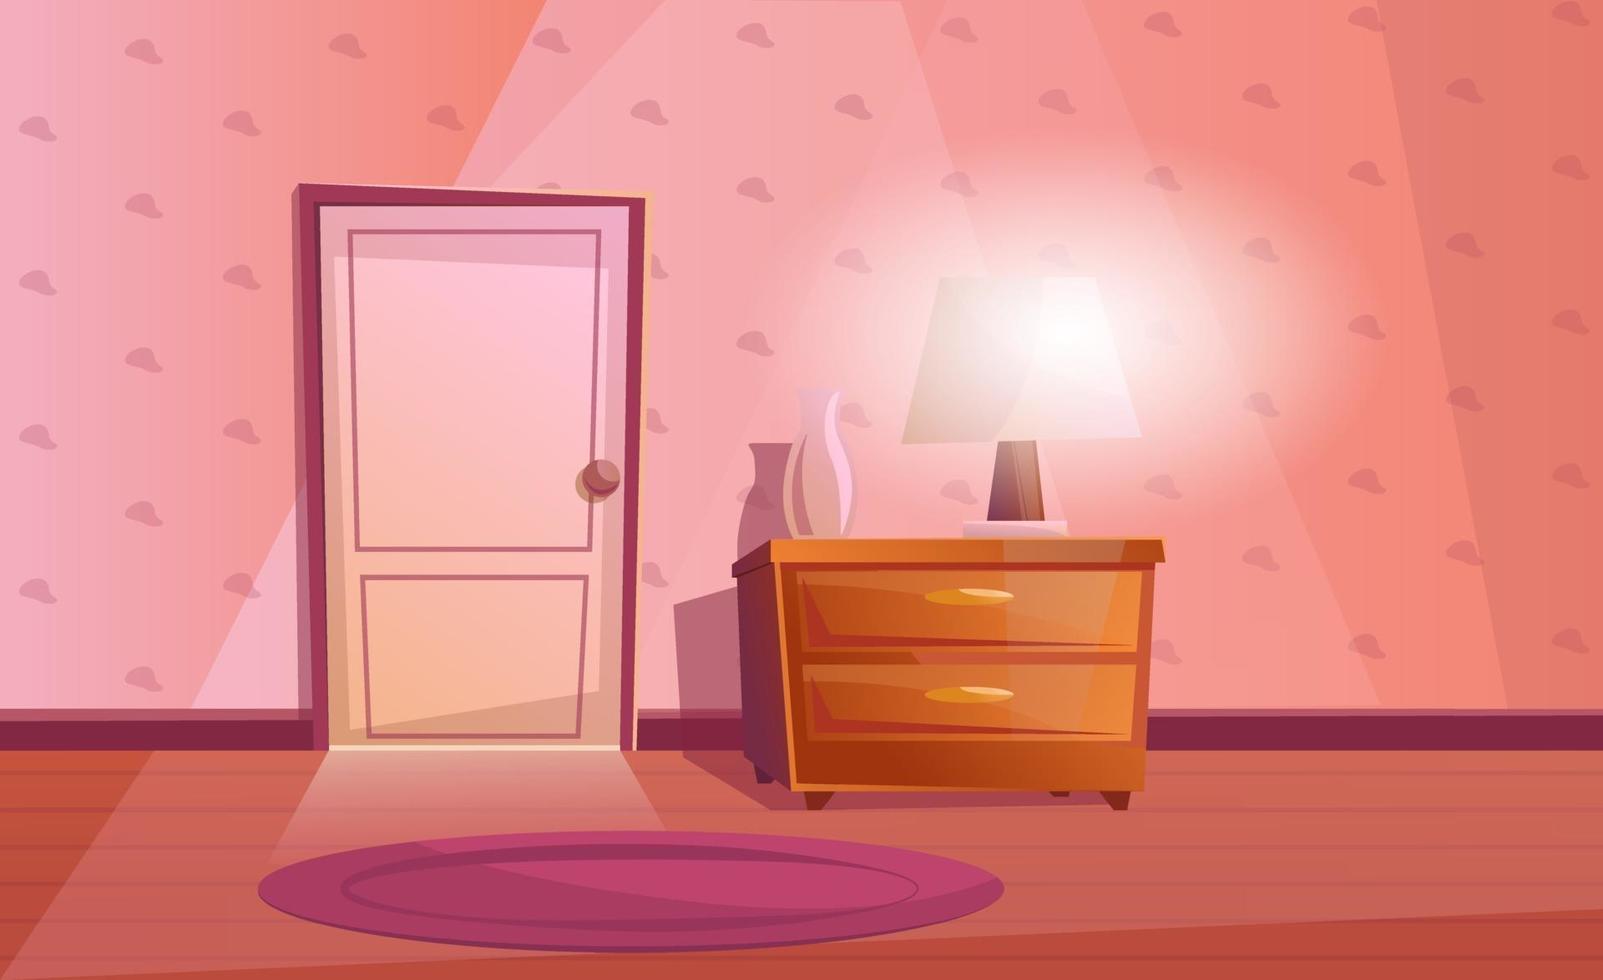 Room interior with door, nightstand with the lamp and vase. Purple carpet on the floor. Textured Wallpaper. Cartoon room in pink color vector